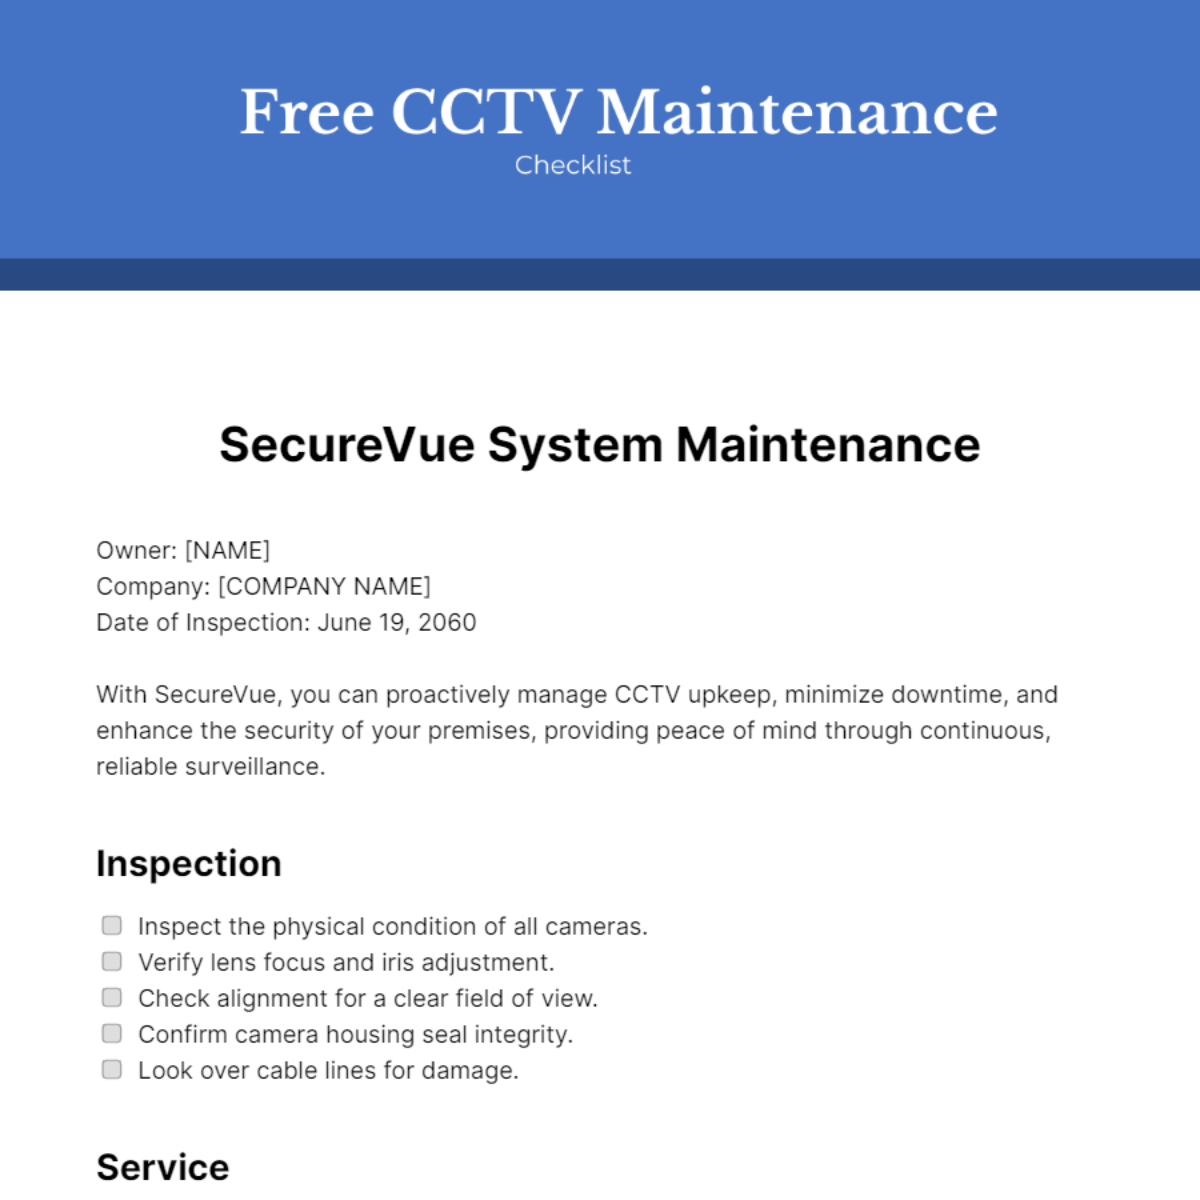 CCTV Maintenance Checklist Template